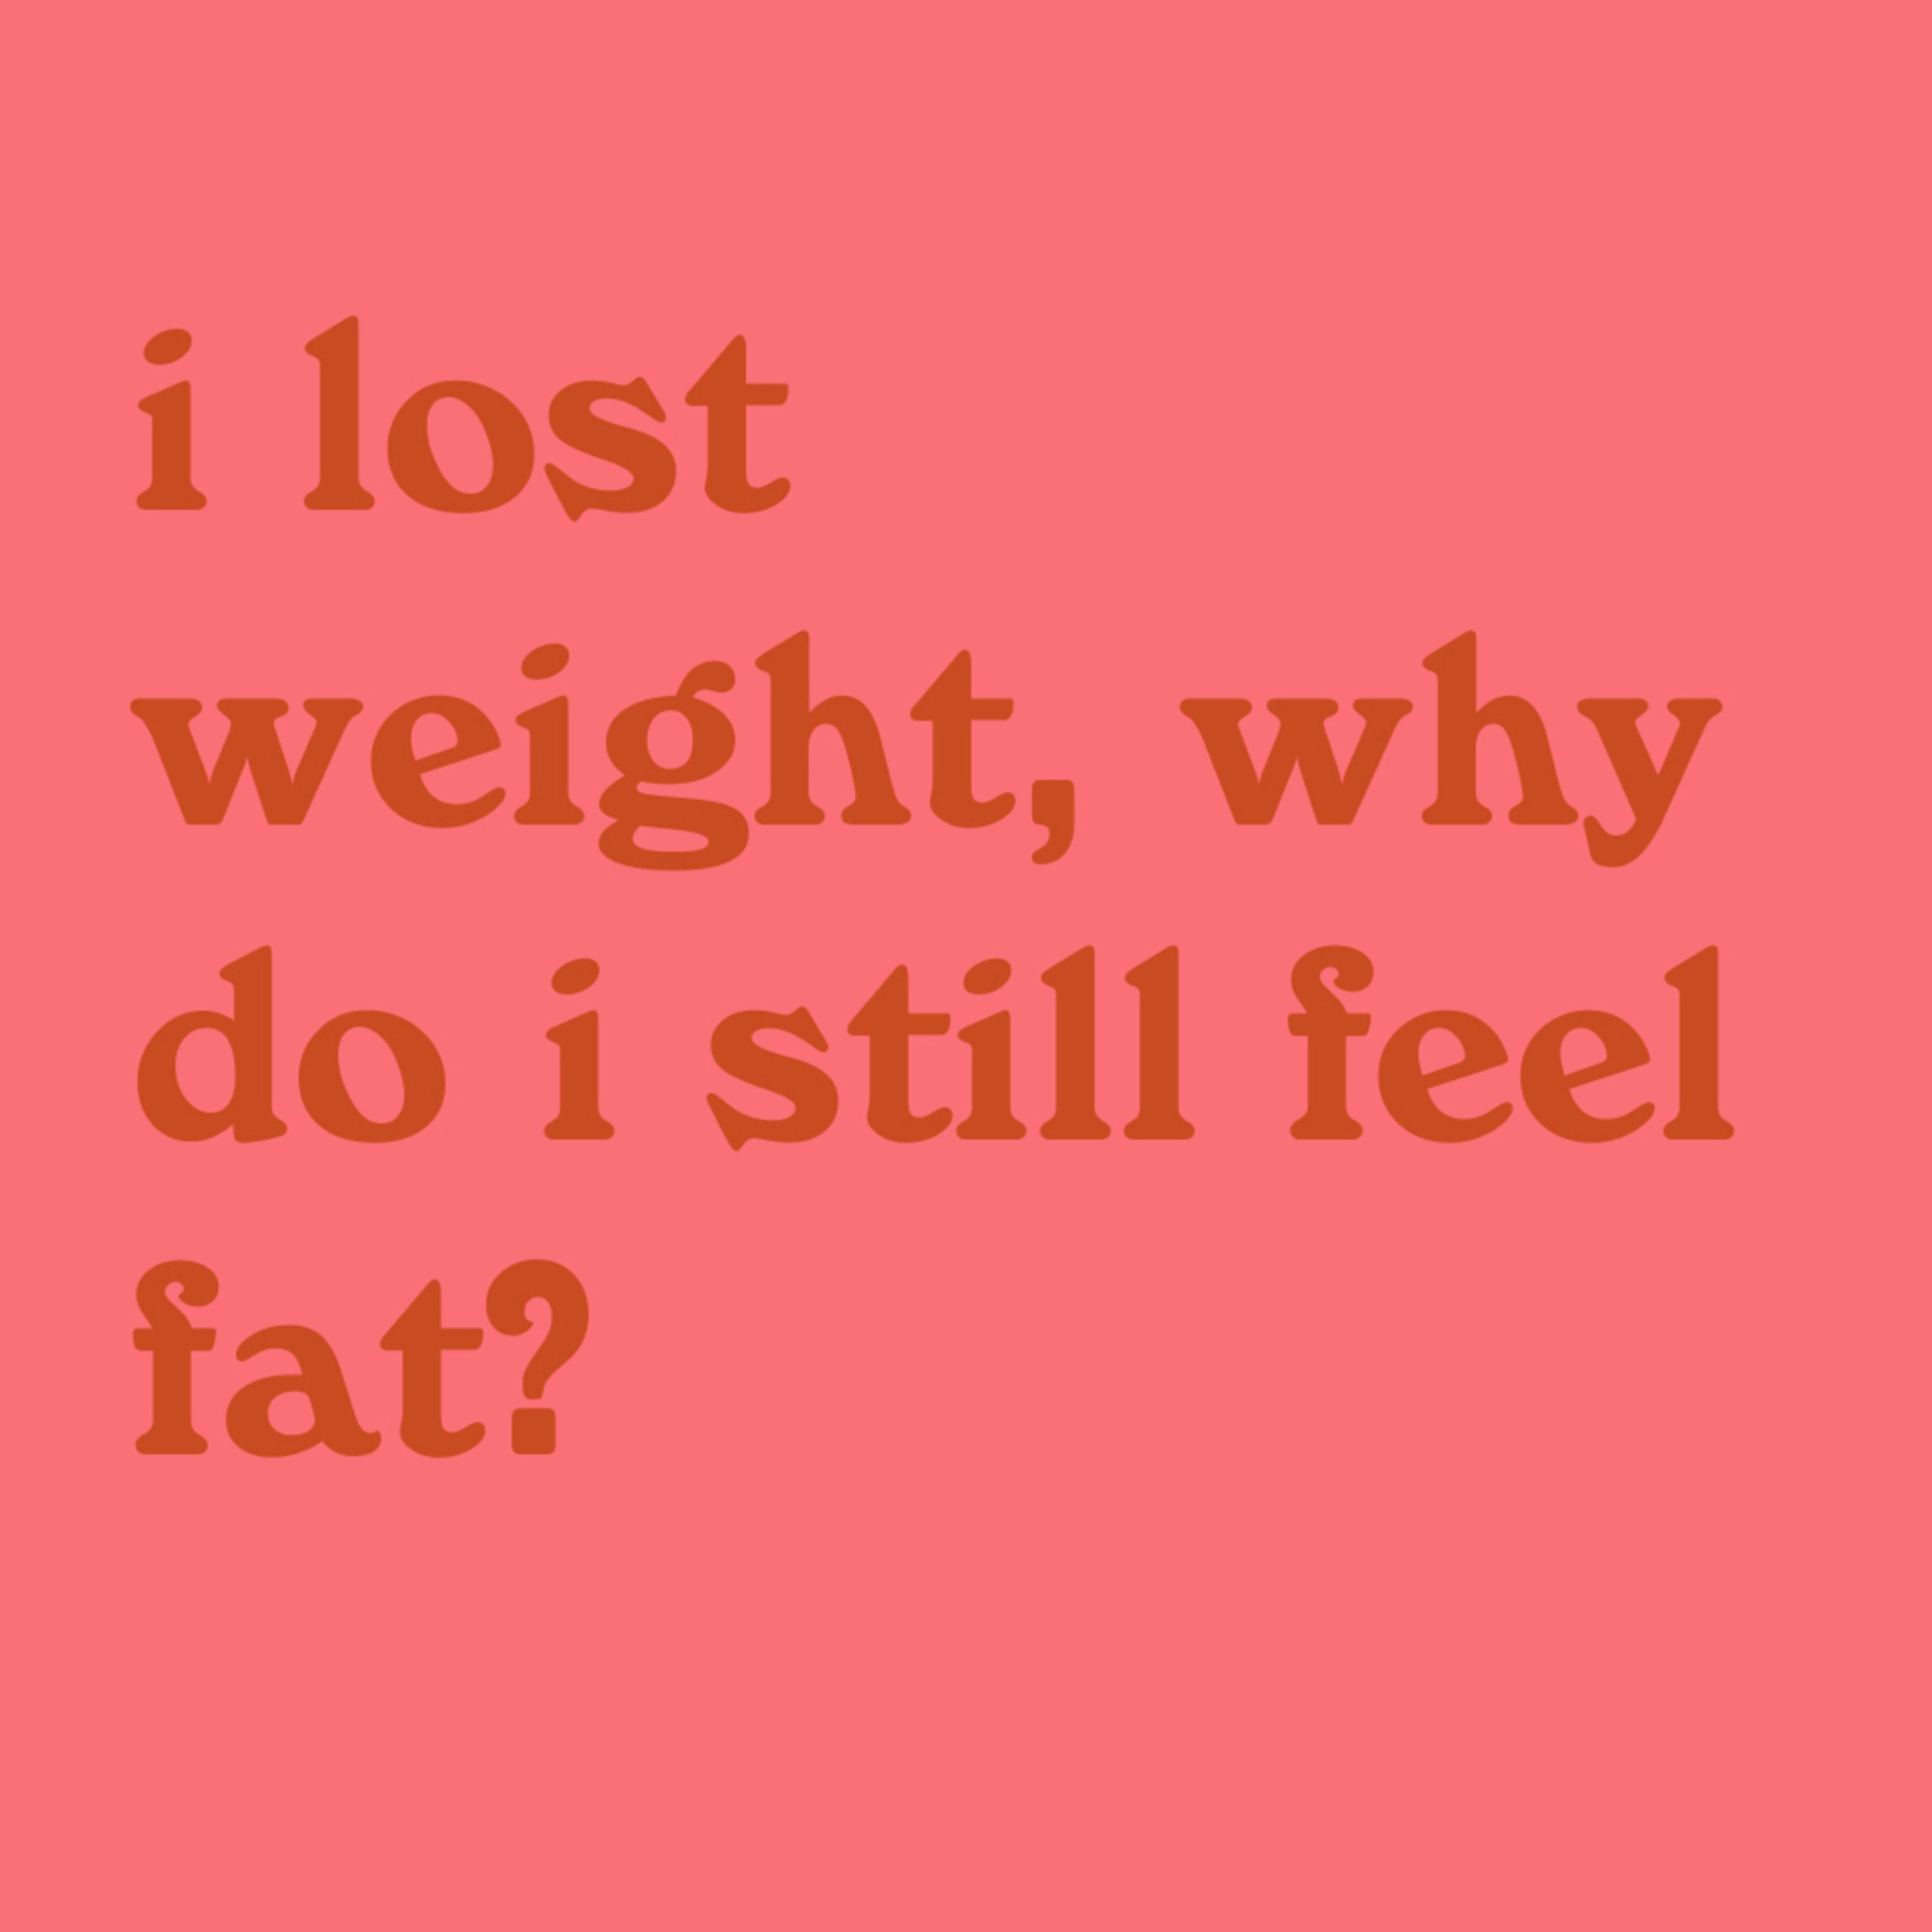 i lost weight, why do i still feel fat?